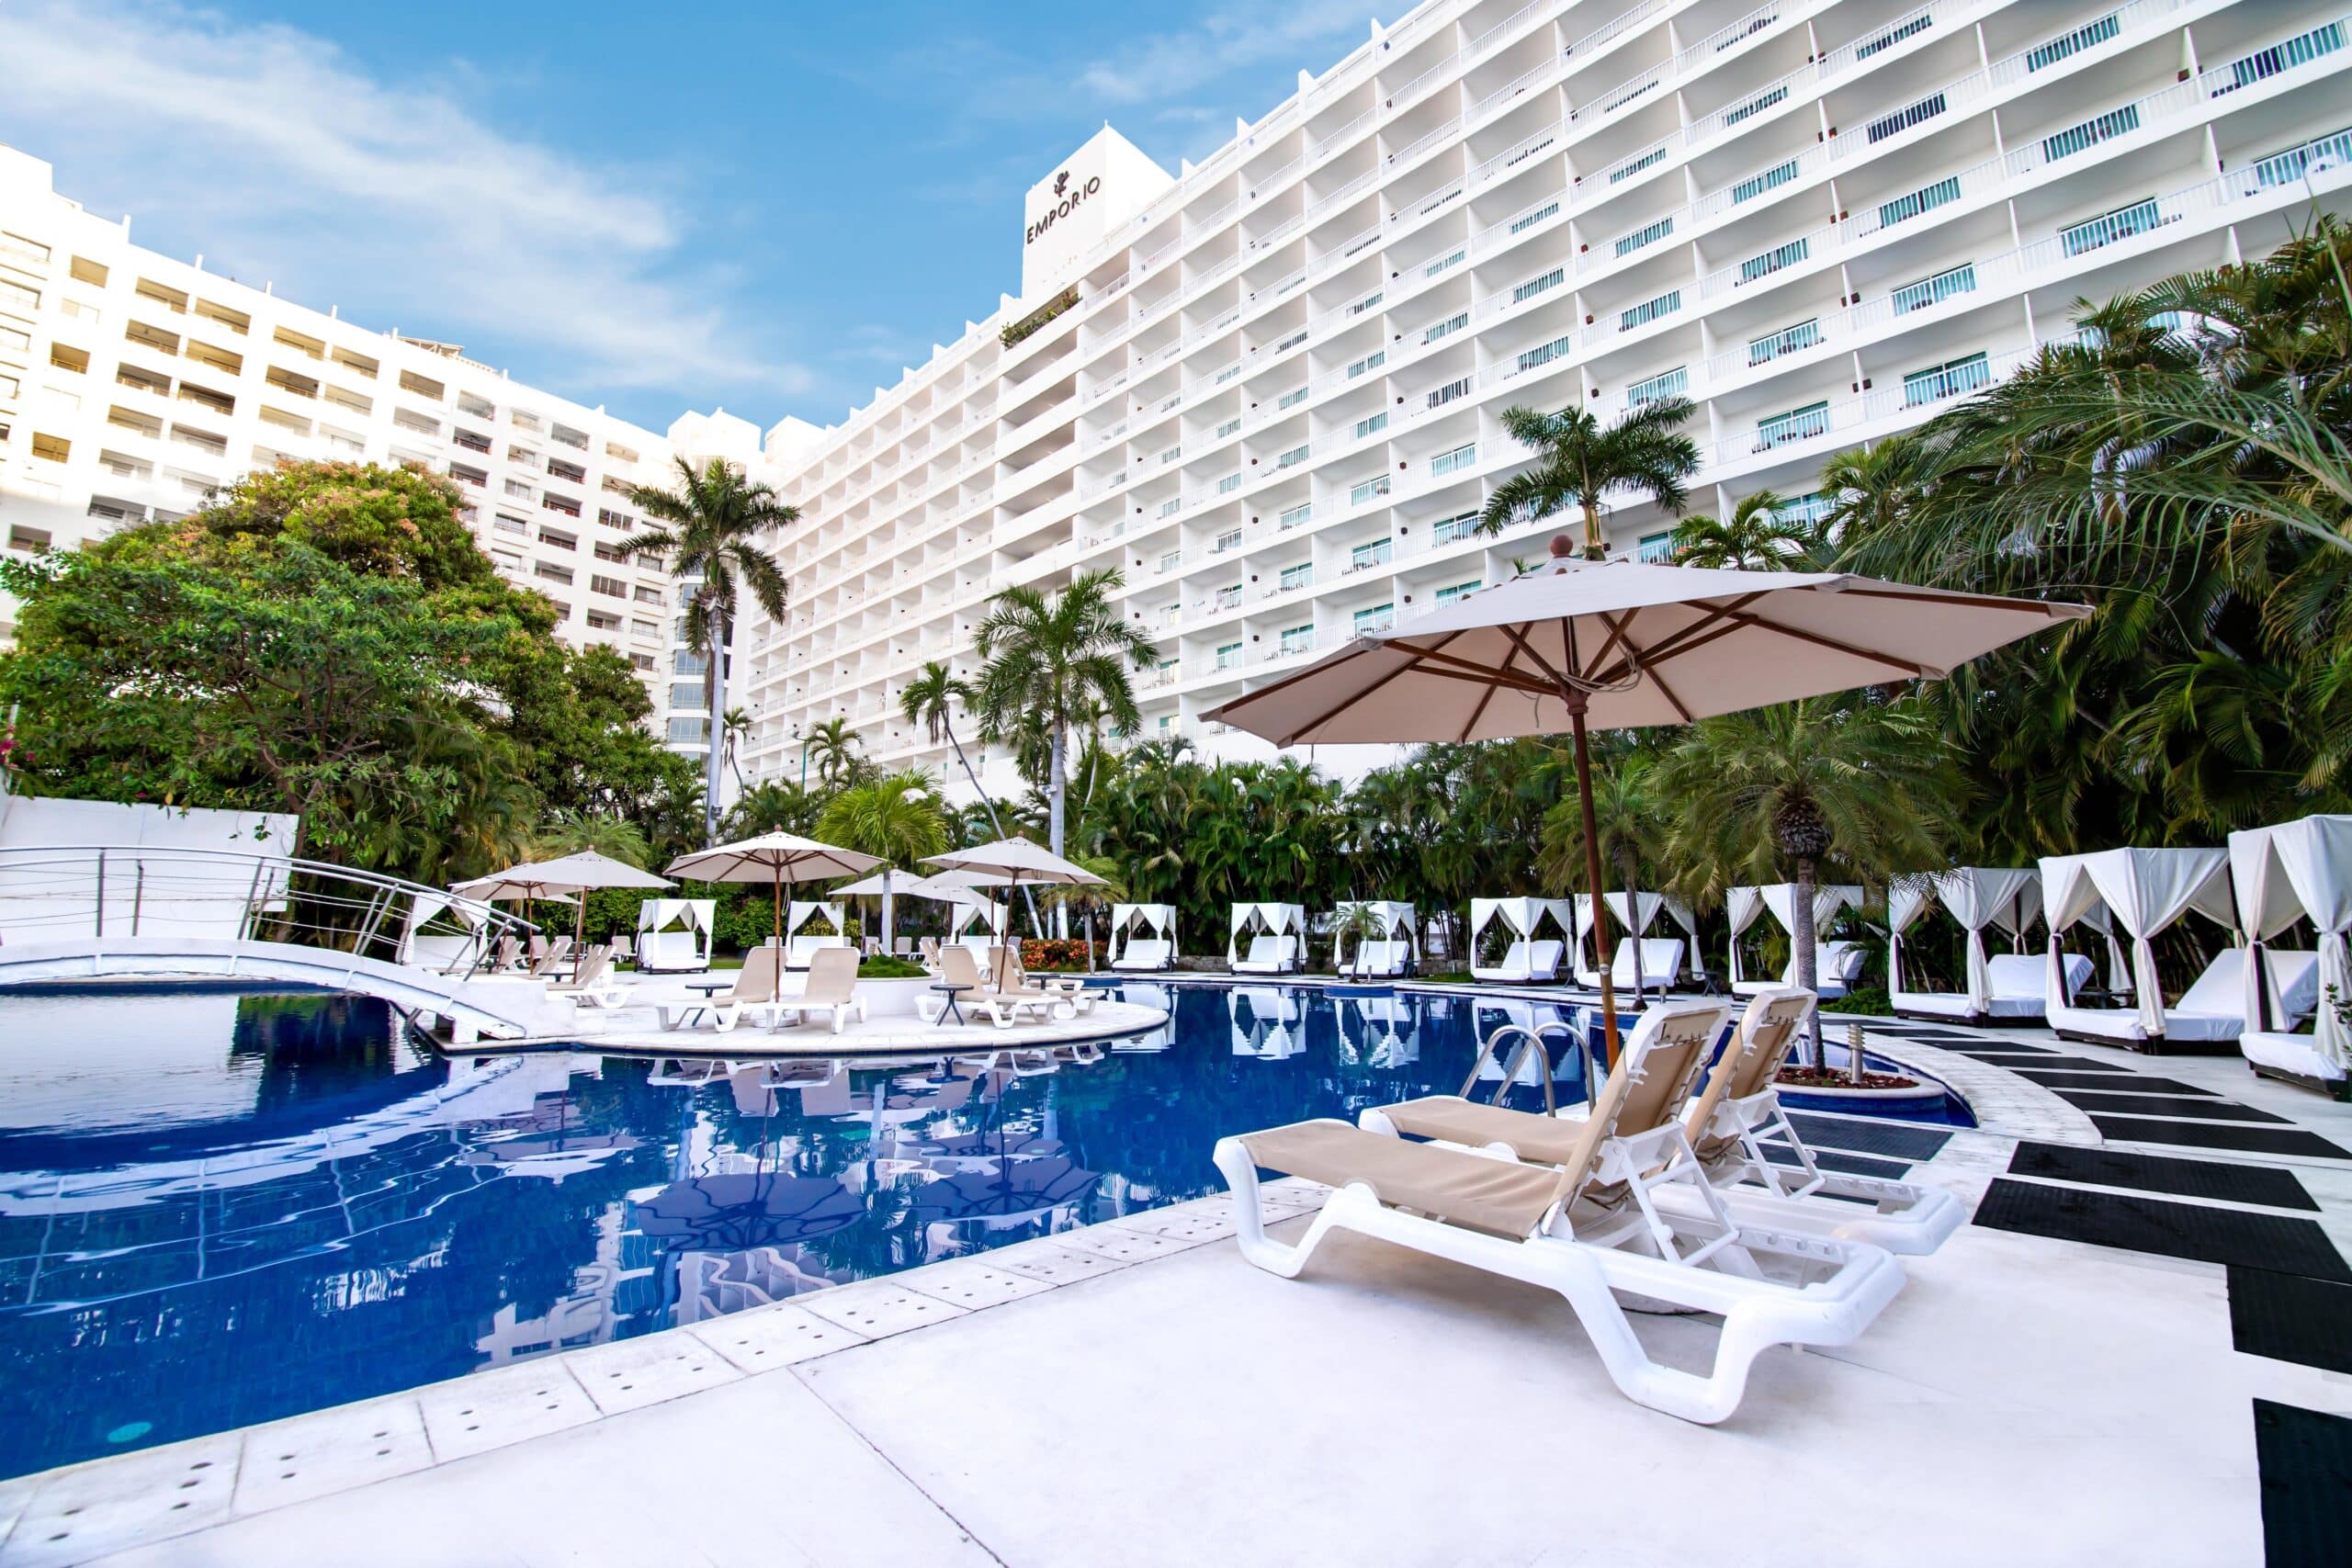 ¿Vas al Tianguis Turístico de Acapulco? Checa estos hoteles para hospedarte